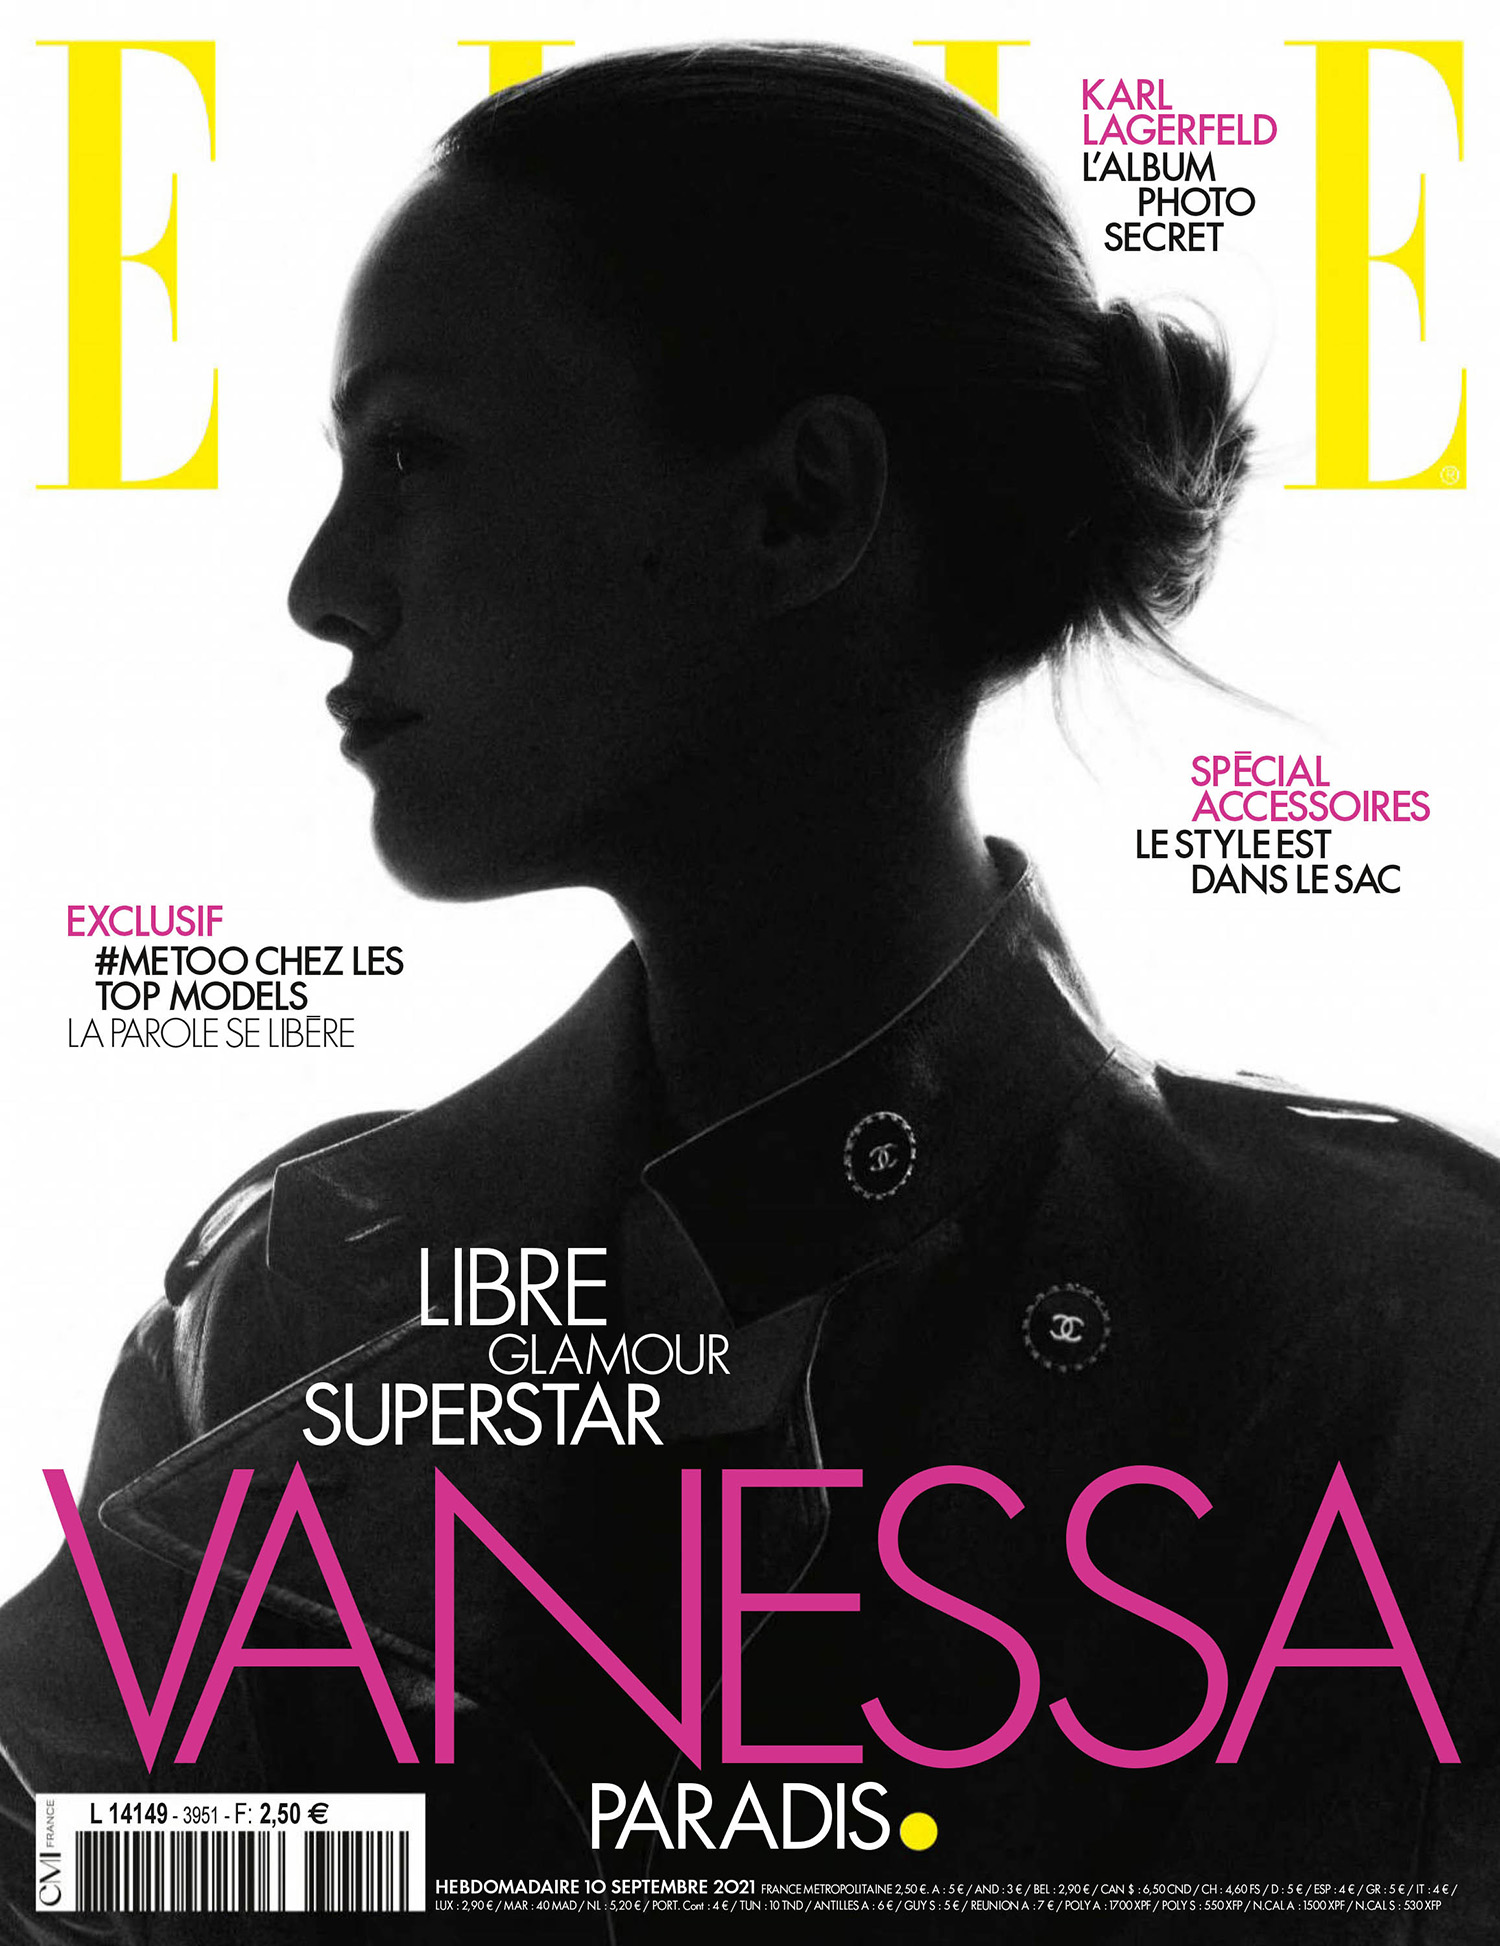 Vanessa Paradis covers Elle France September 10th, 2021 by Karim Sadli